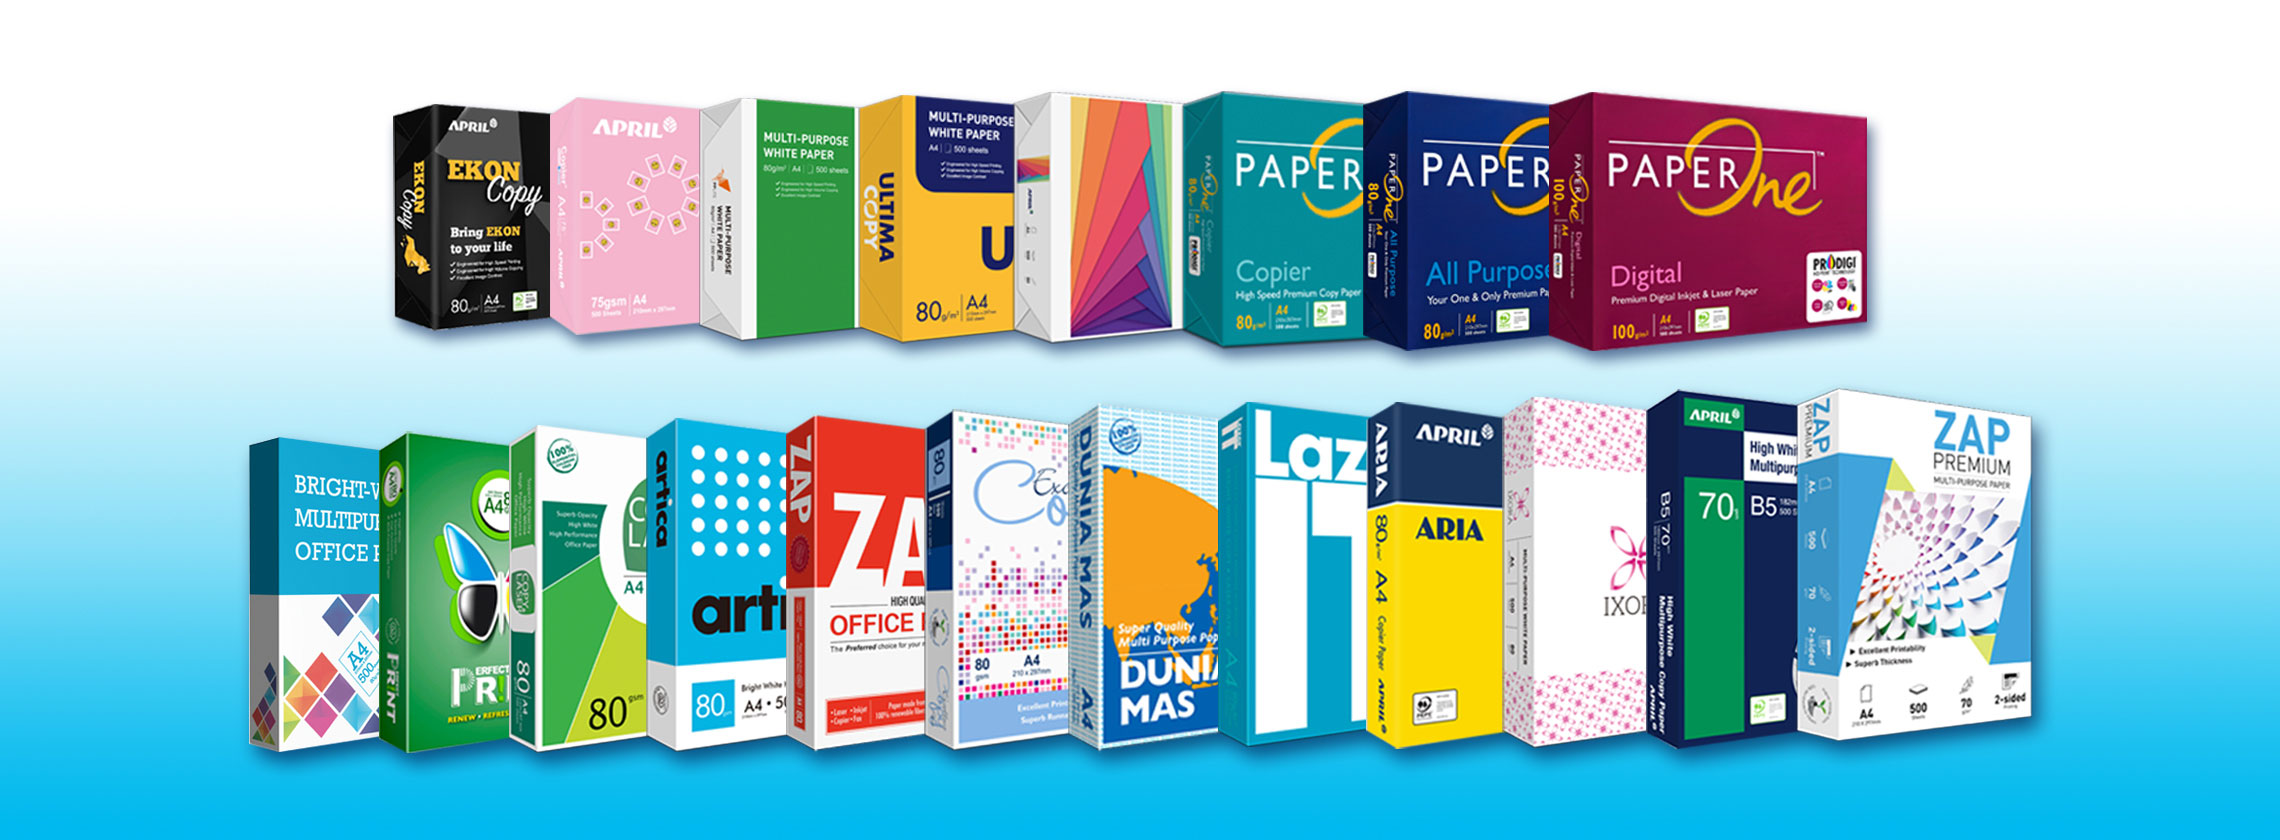 500 A4 sheets of Sainsburys basics white printer paper Stock Photo